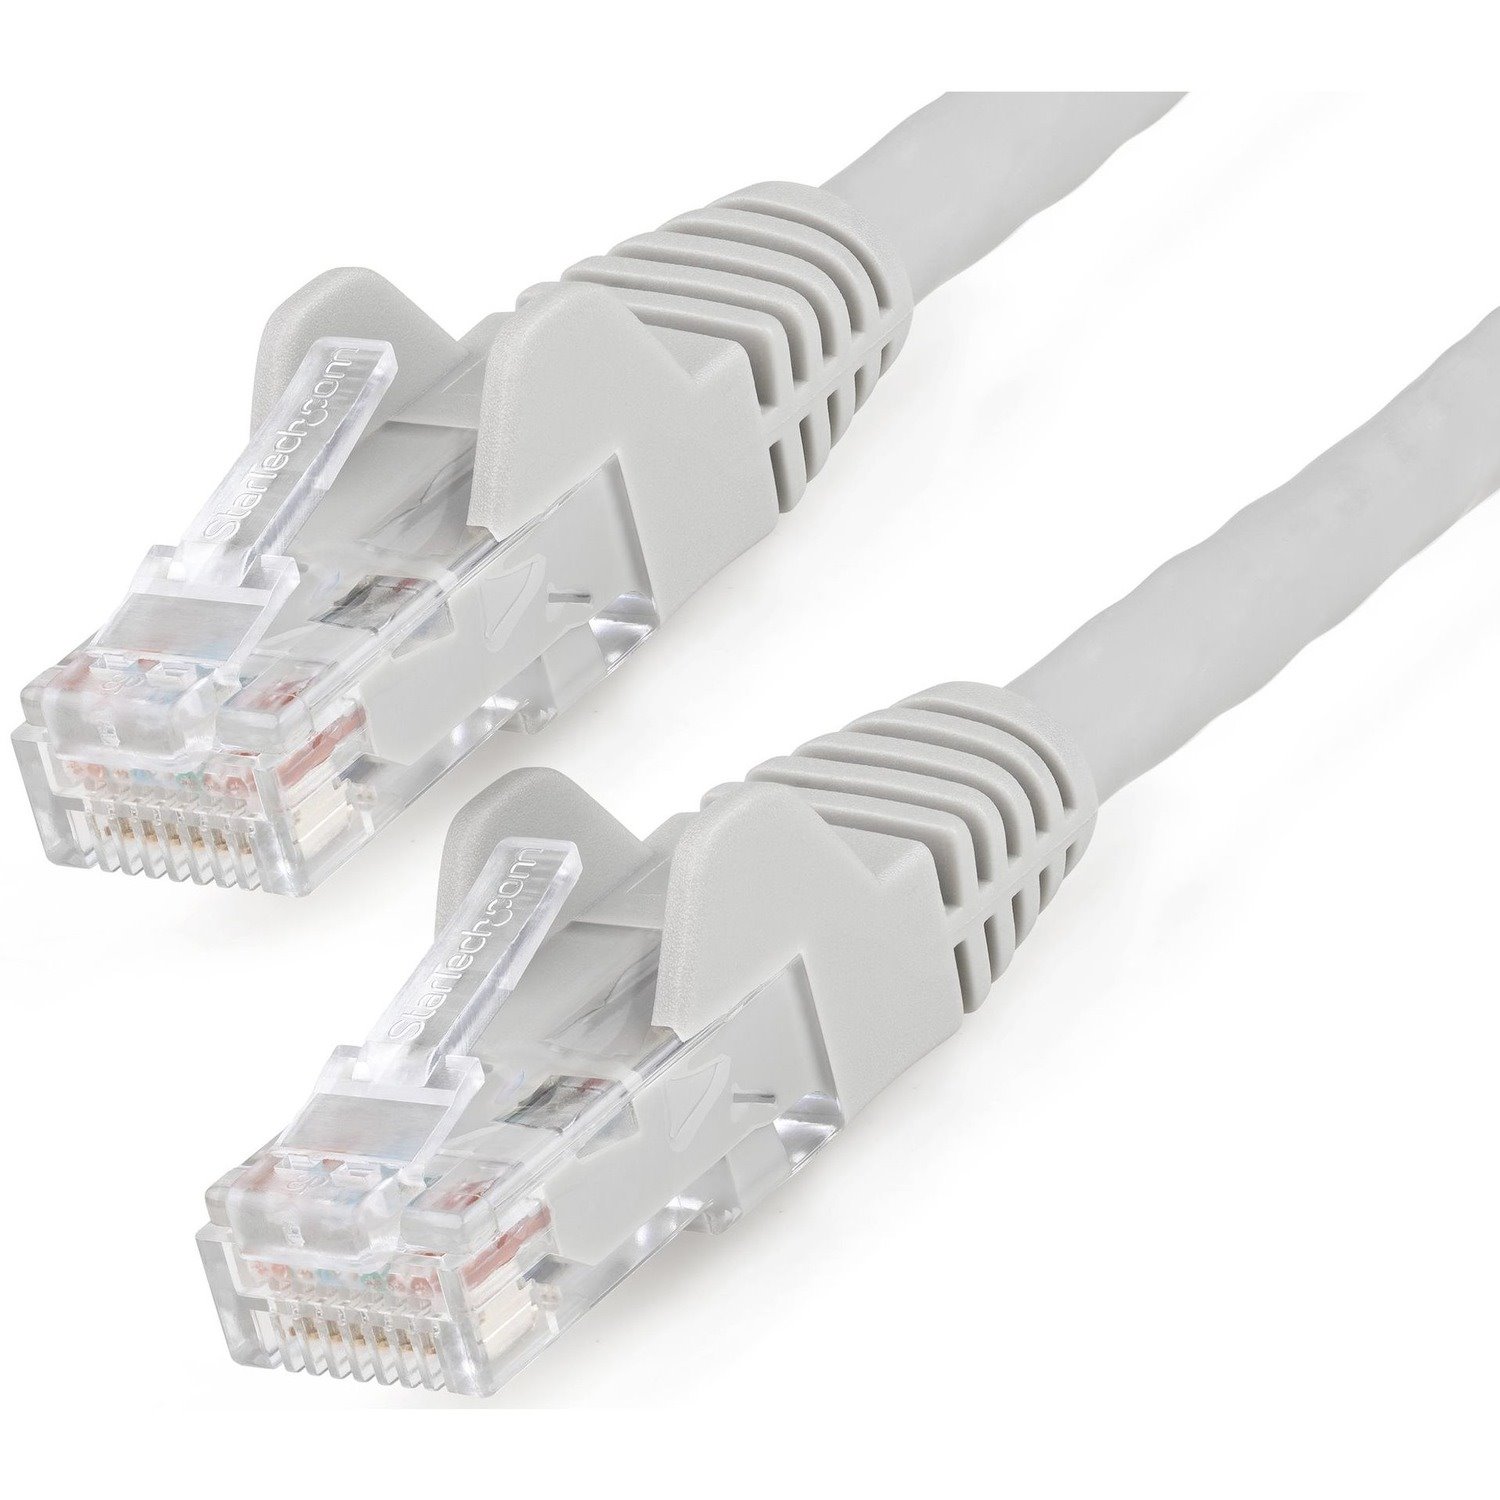 StarTech.com 10m CAT6 Ethernet Cable, LSZH (Low Smoke Zero Halogen), 10 GbE Snagless 100W PoE UTP RJ45 Grey CAT 6 Network Patch Cord, ETL